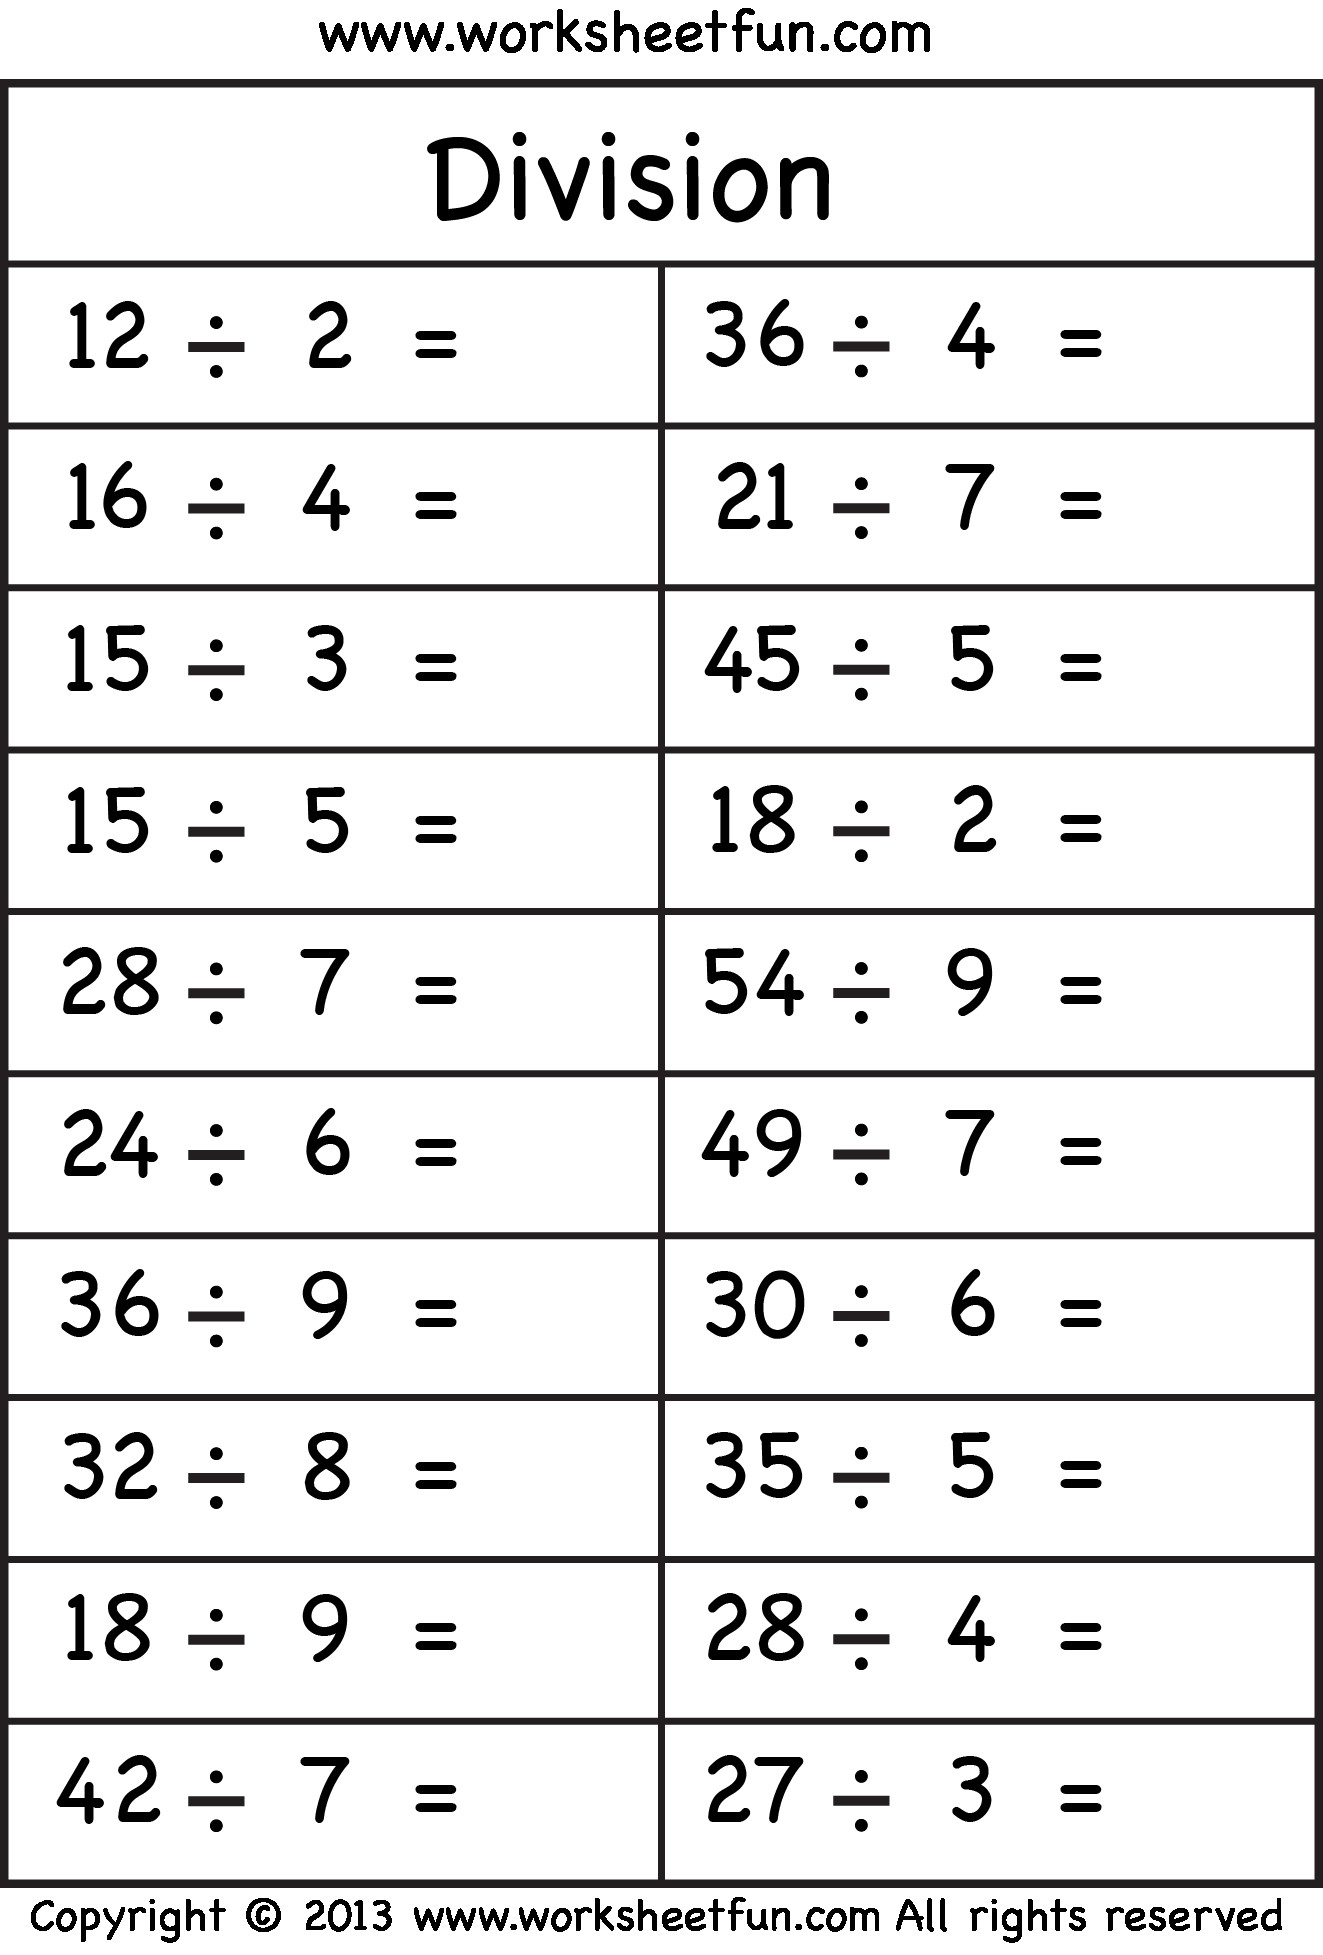 5 Free Math Worksheets Third Grade 3 Division Division Facts 1 To 10 AMP